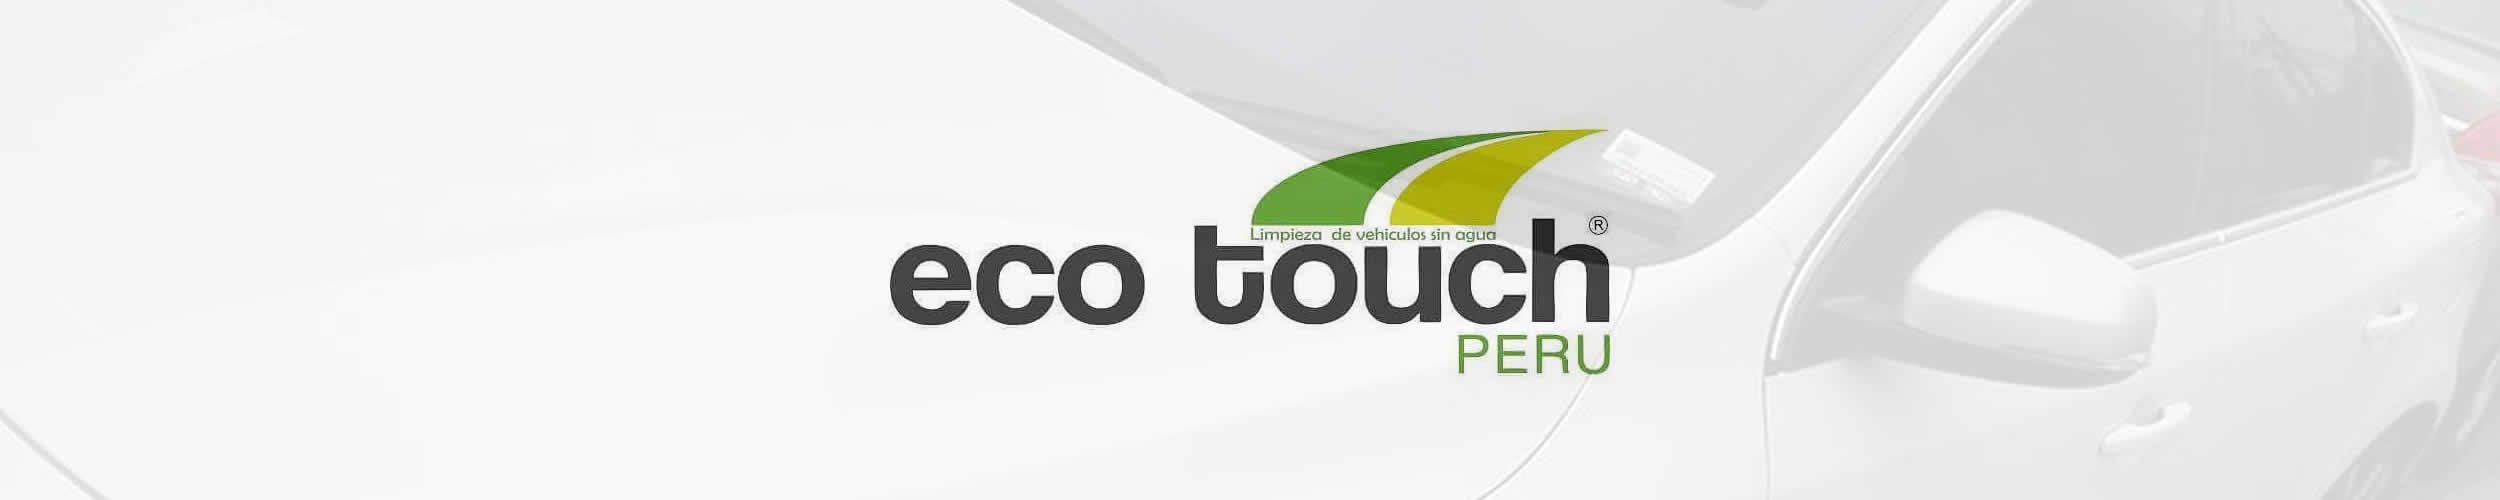 Eco Touch Peru